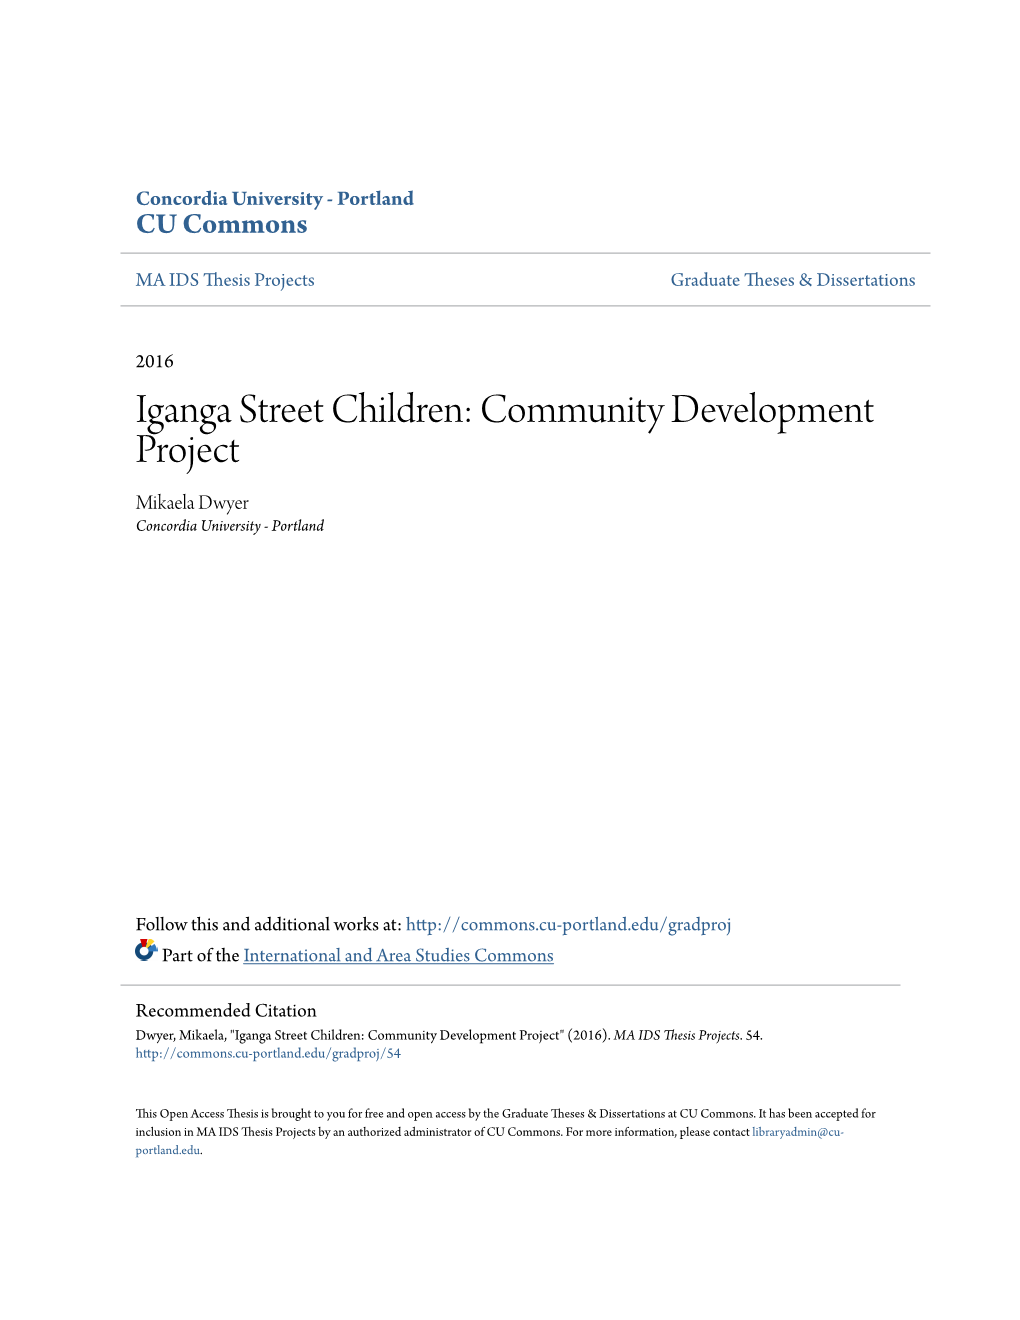 Iganga Street Children: Community Development Project Mikaela Dwyer Concordia University - Portland